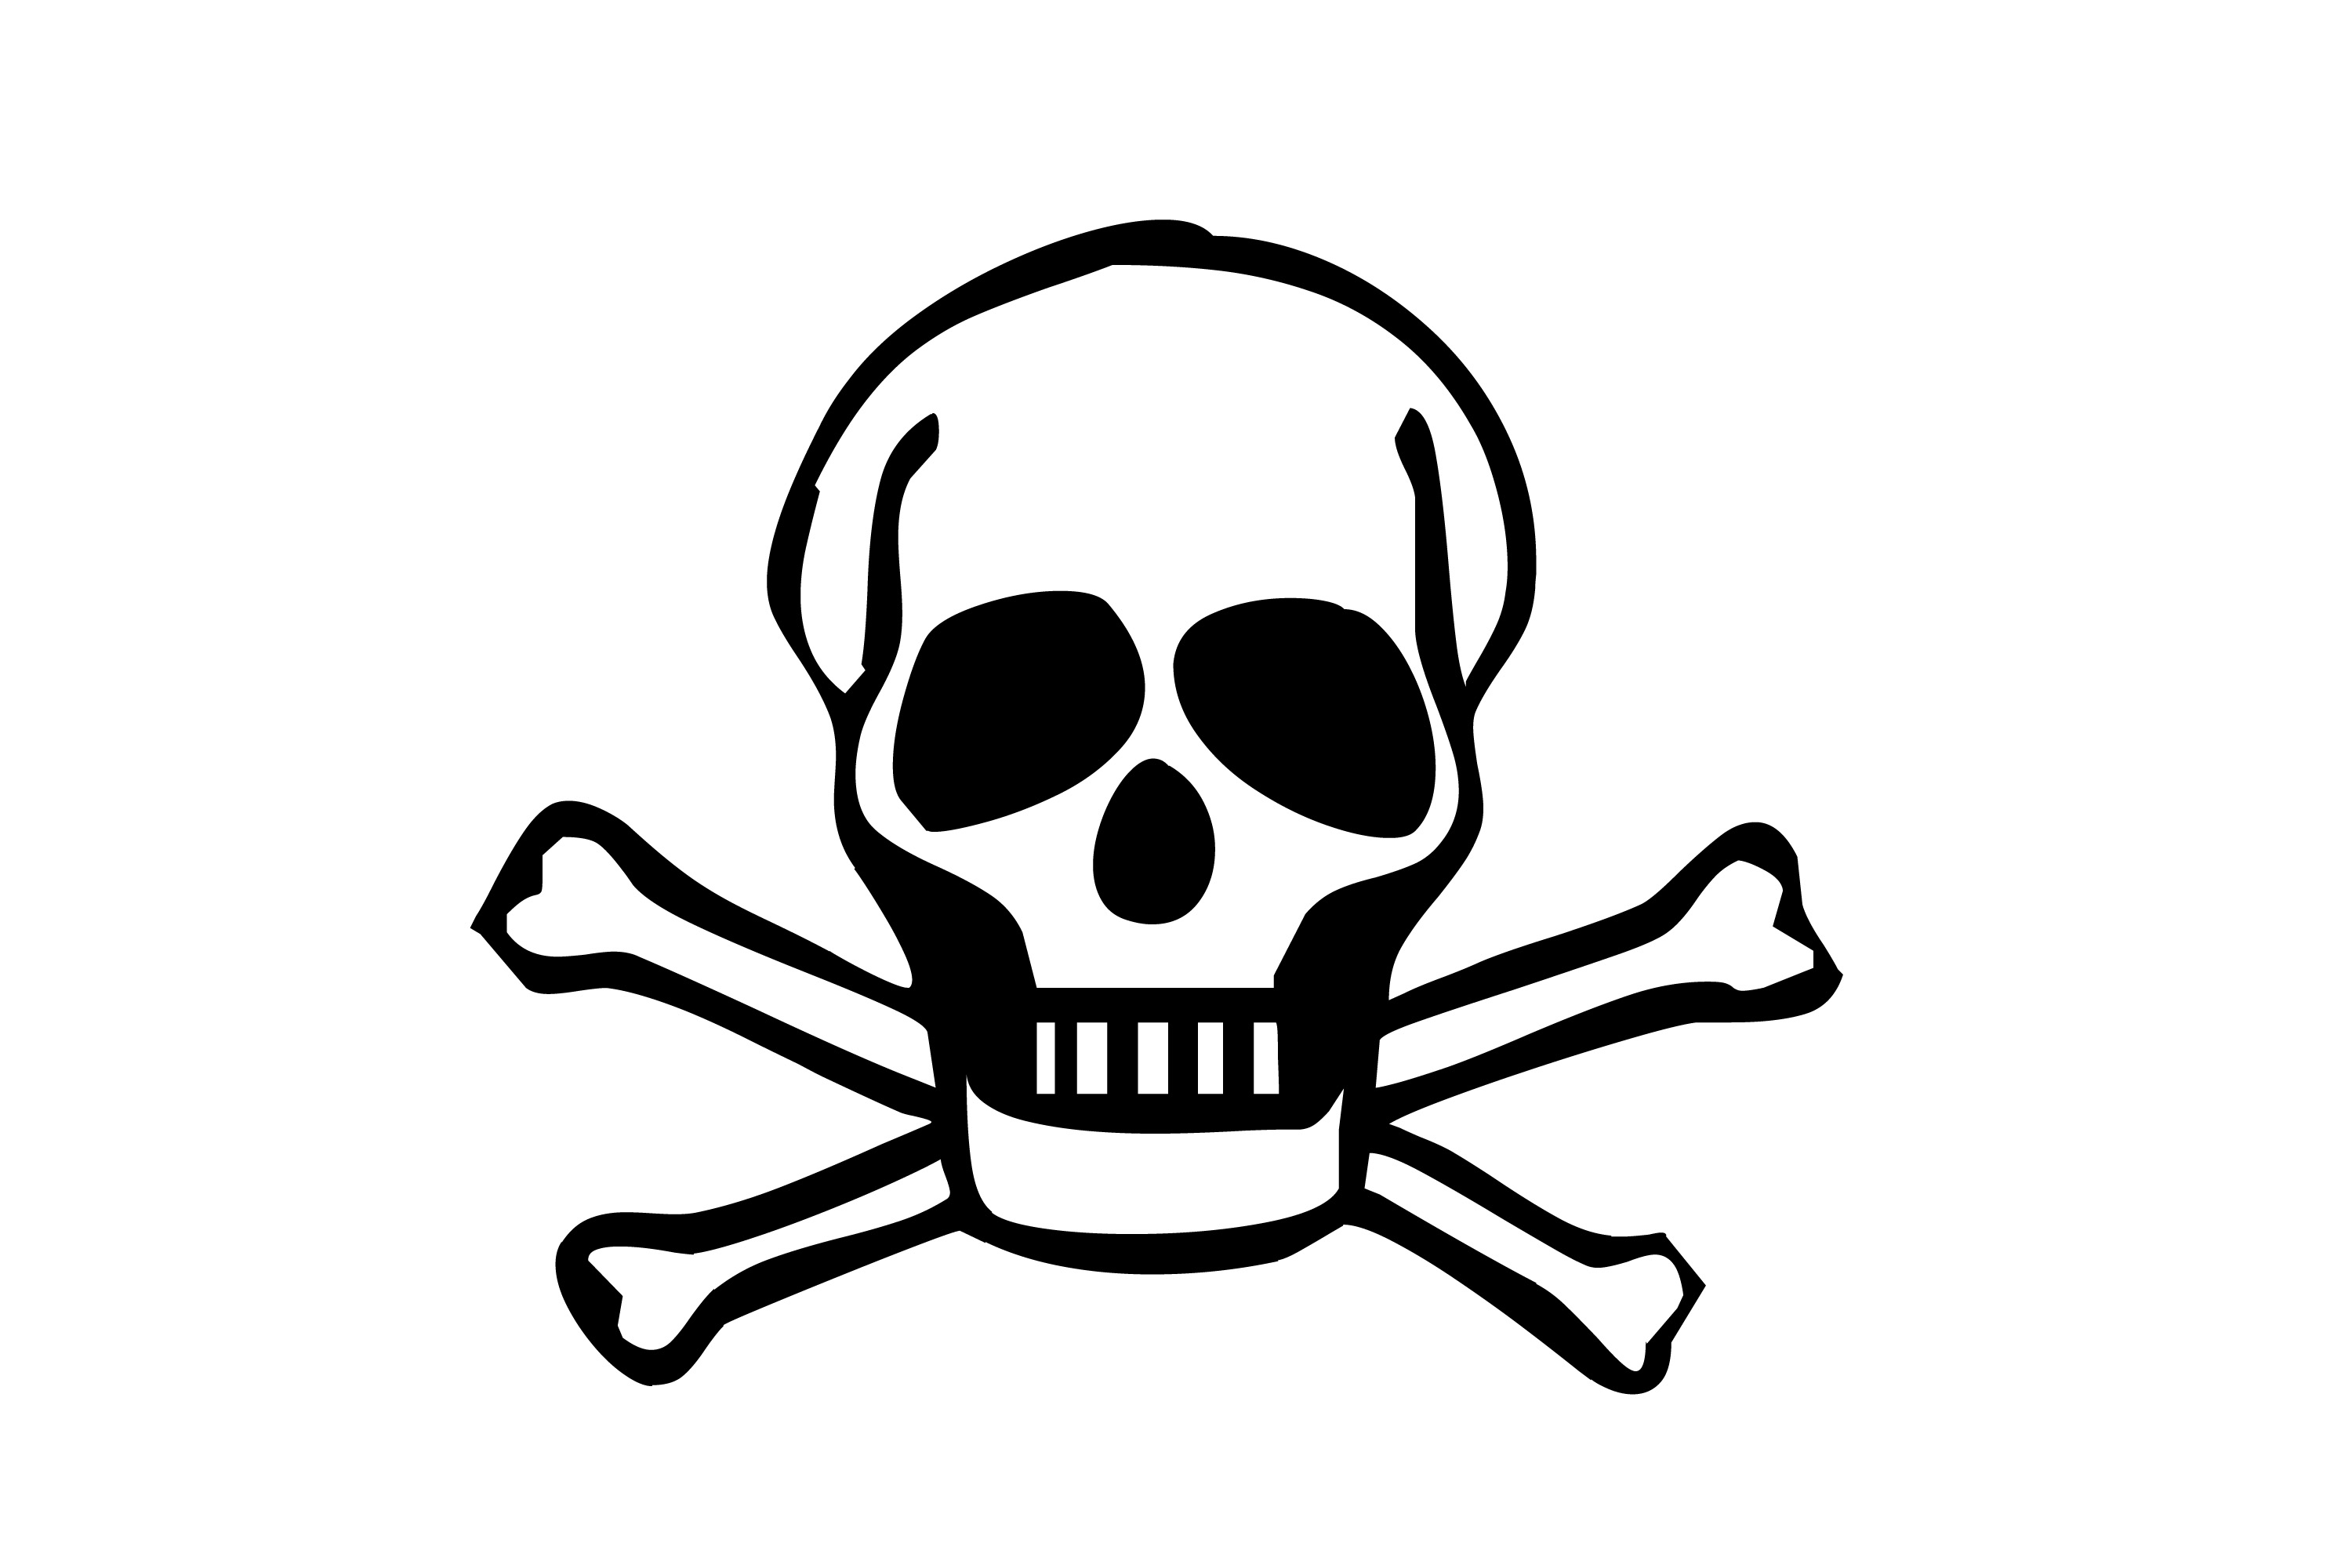 Skull And Crossbones Danger Sign - ClipArt Best